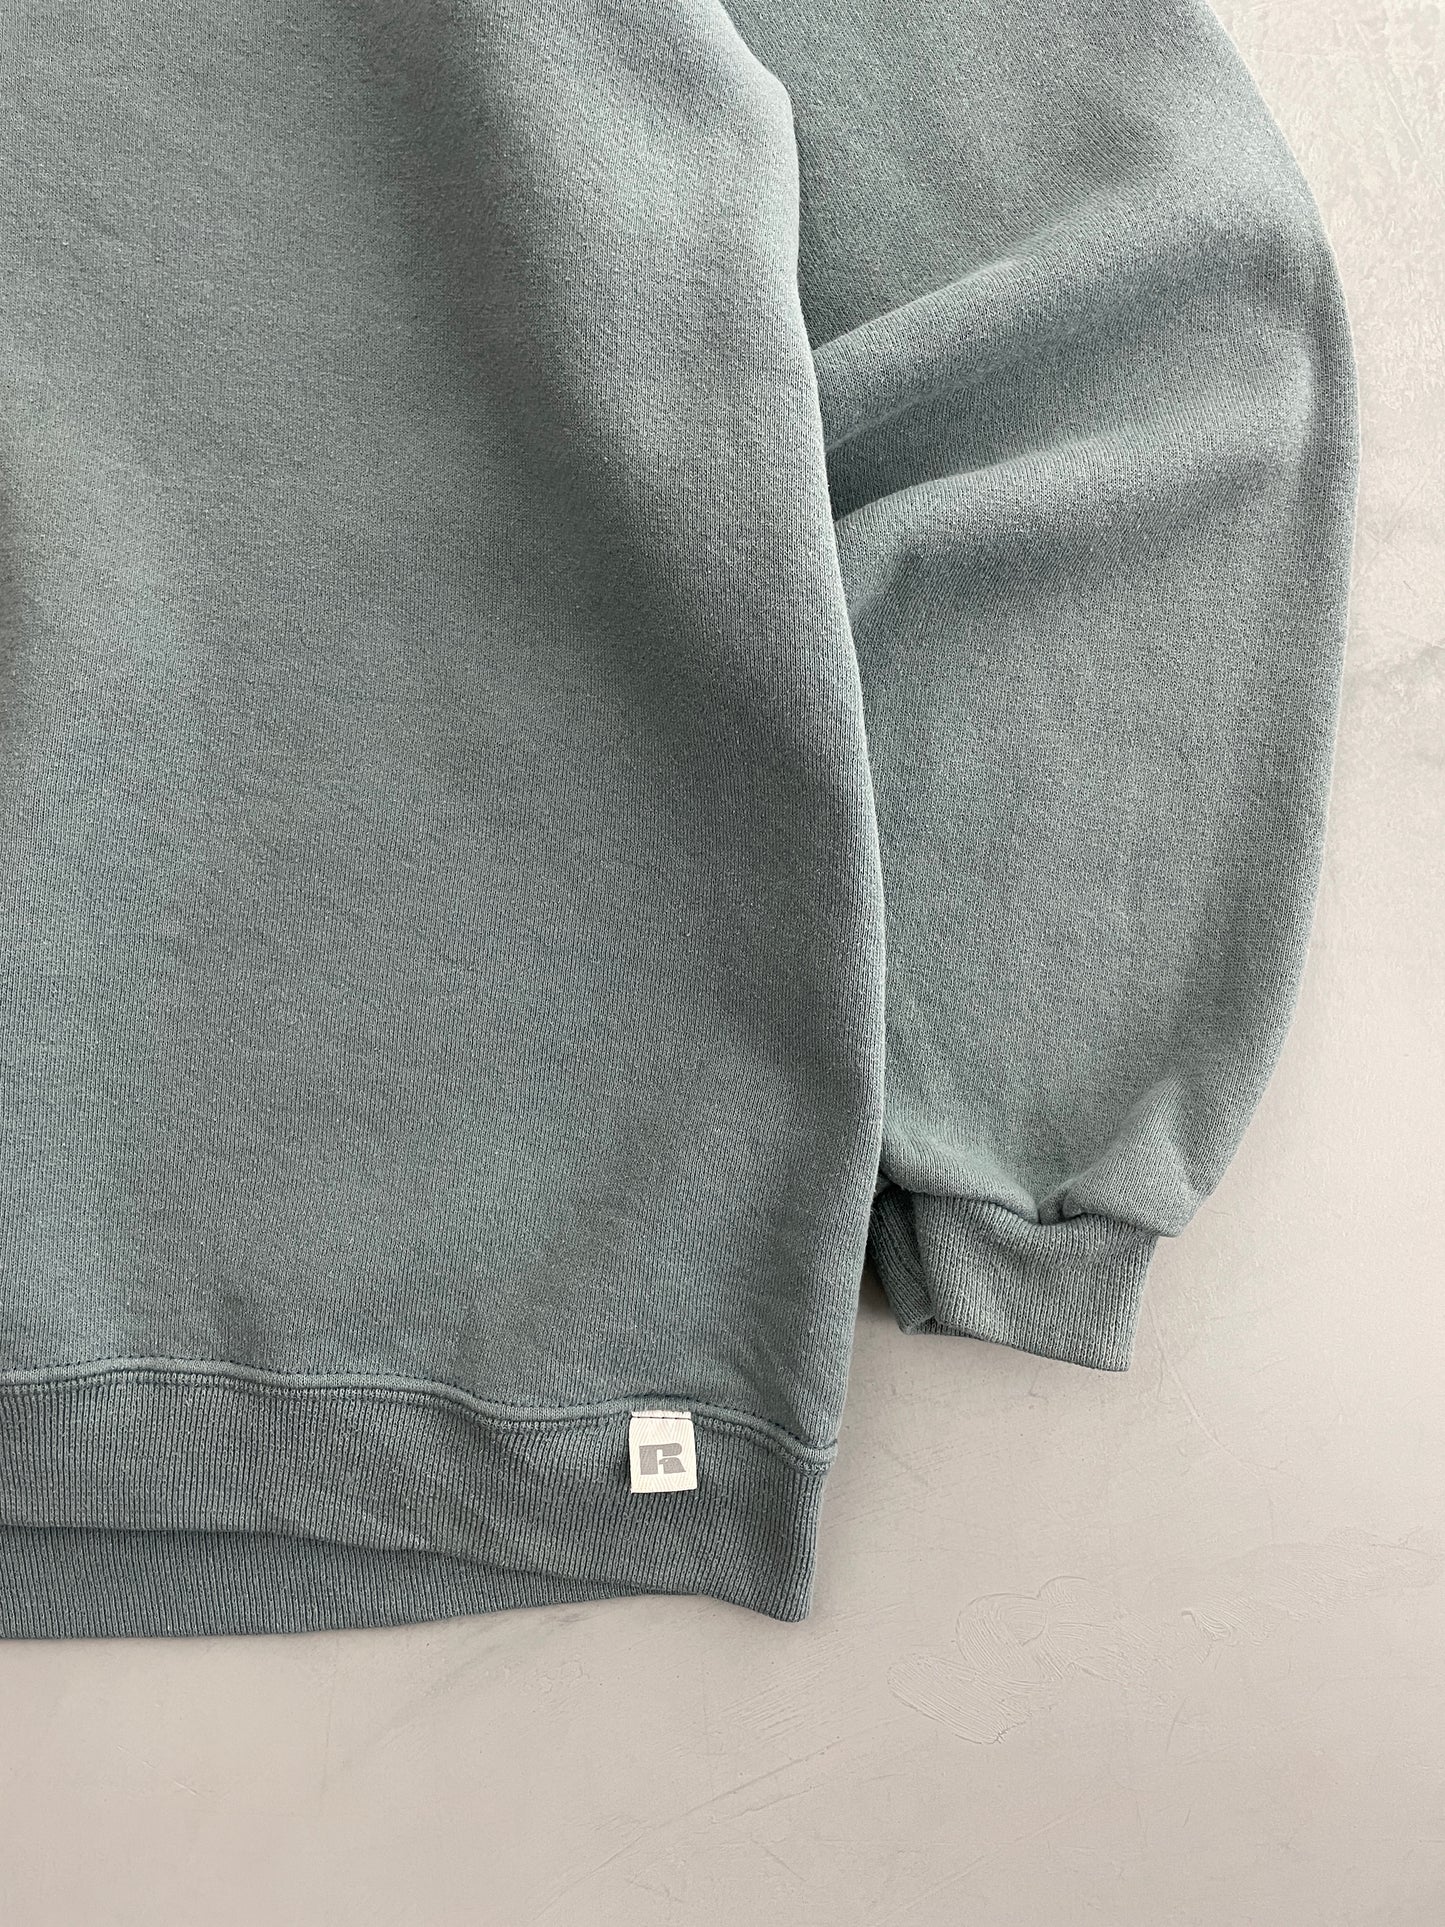 Faded Made In USA Blank Russel Sweatshirt [XL]